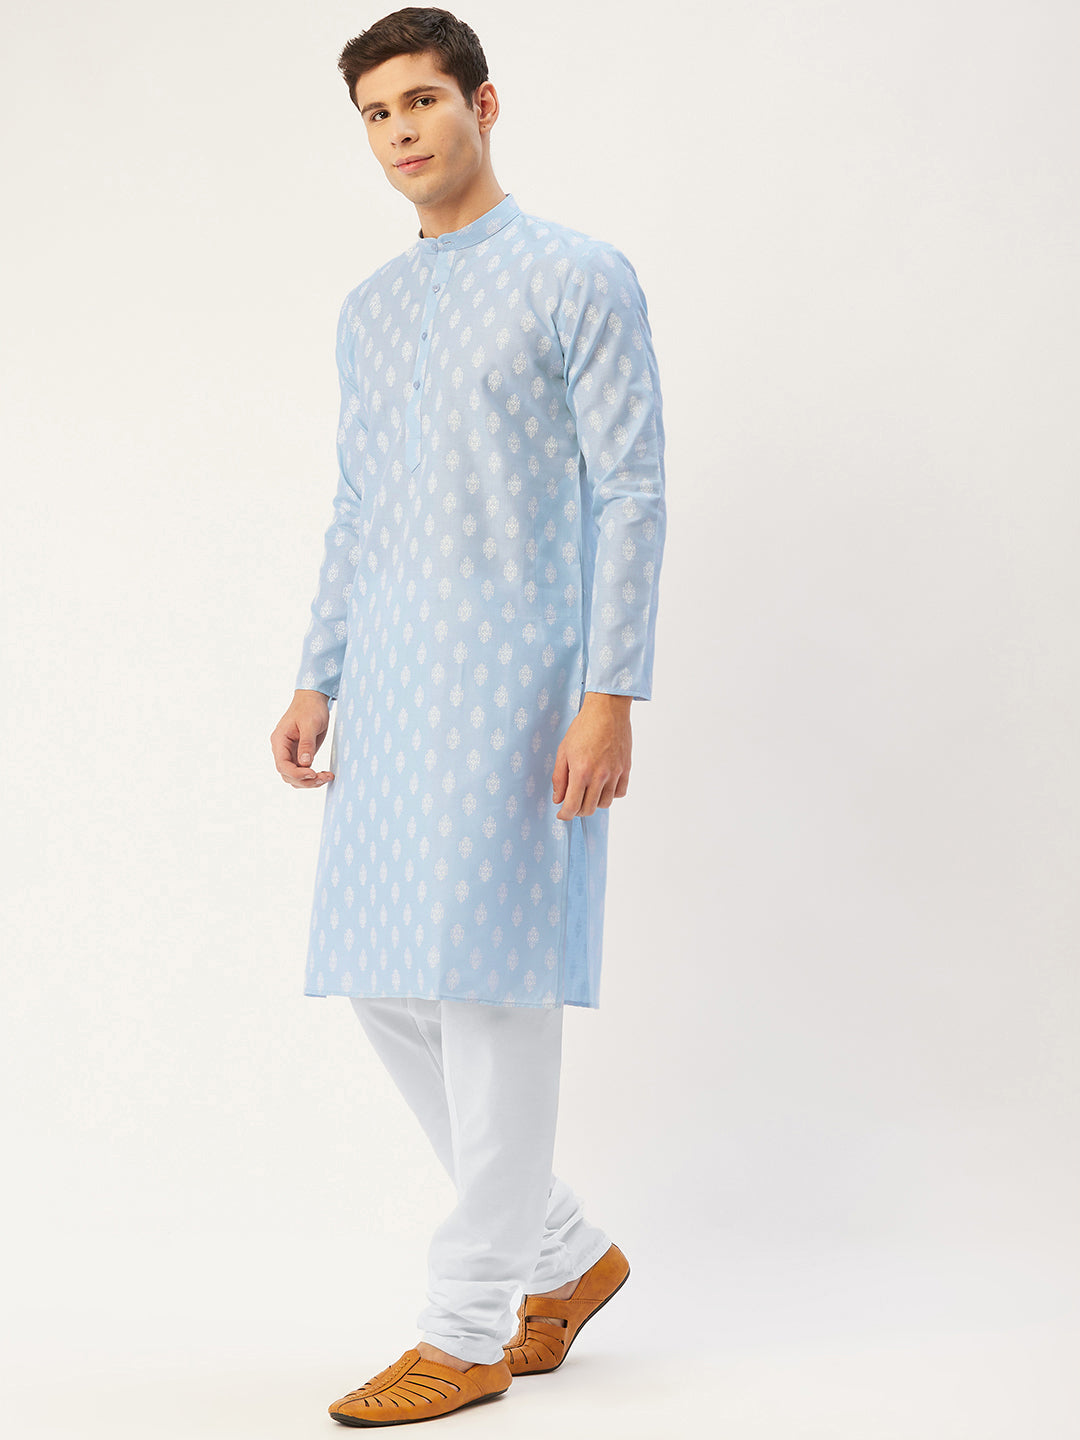 Jompers Men's Sky Cotton Floral Printed kurta Pyjama Set